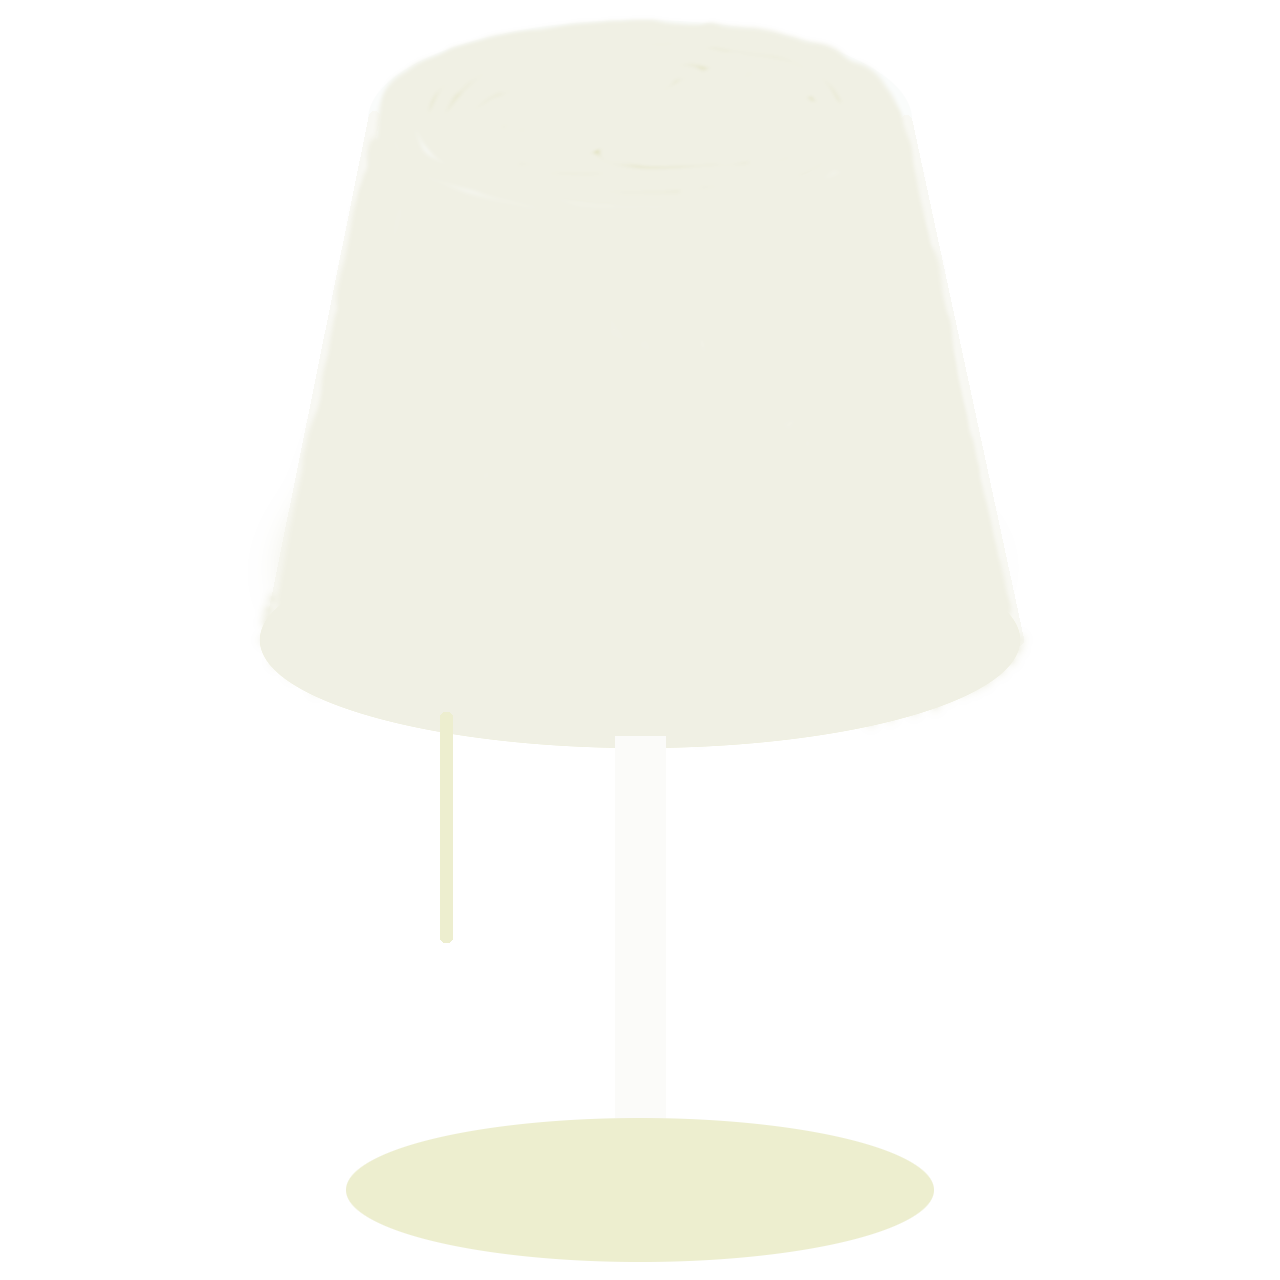 Lamp Stack Cryptic Logo